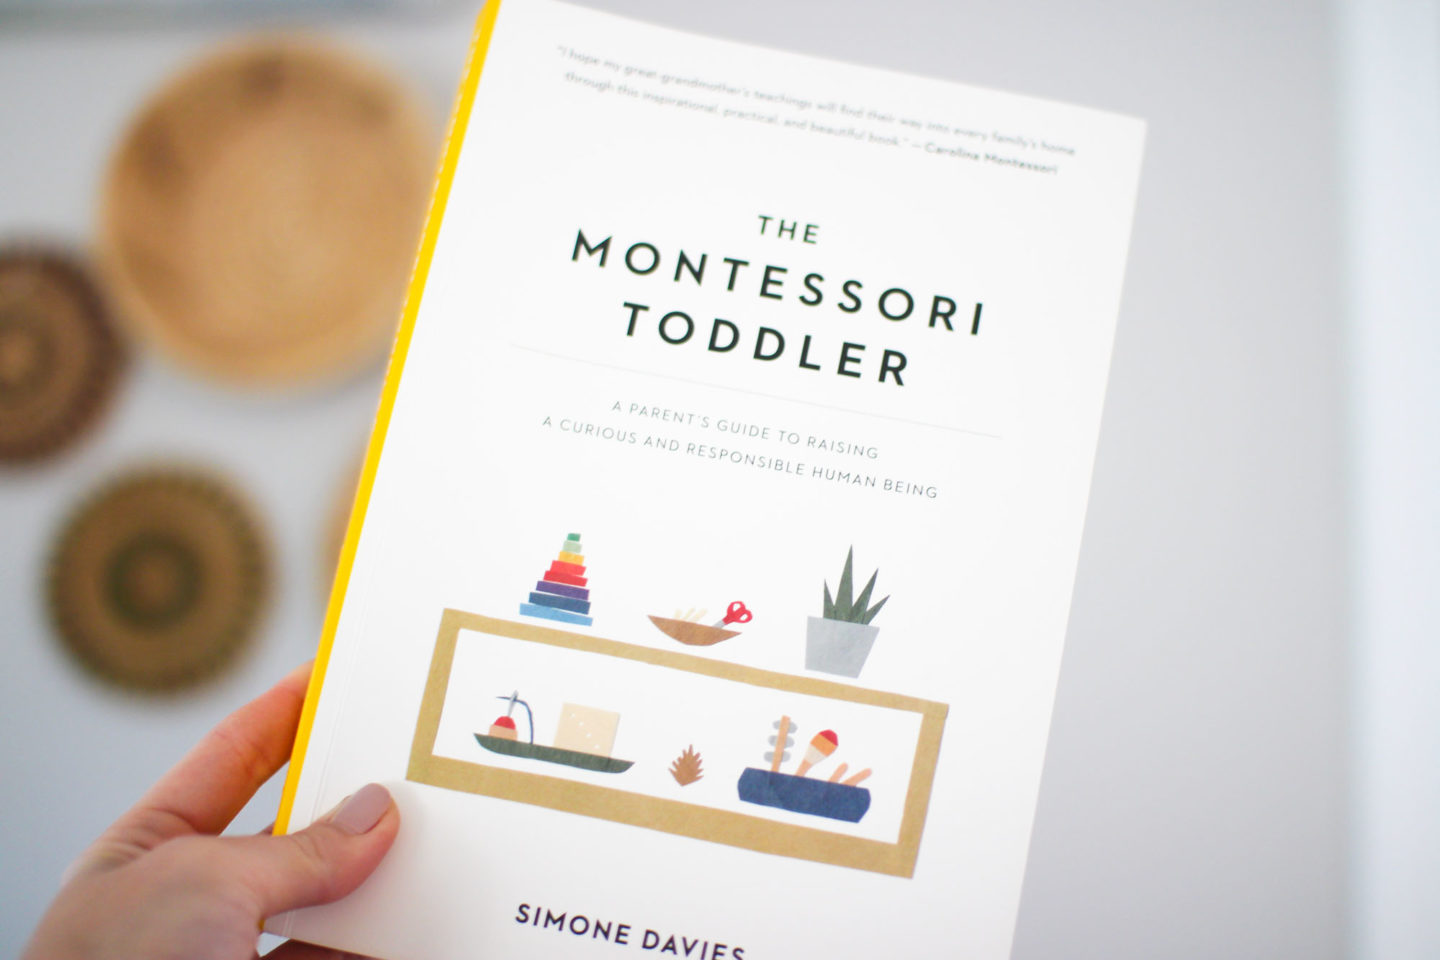 simone davies montessori toddler book struckblog